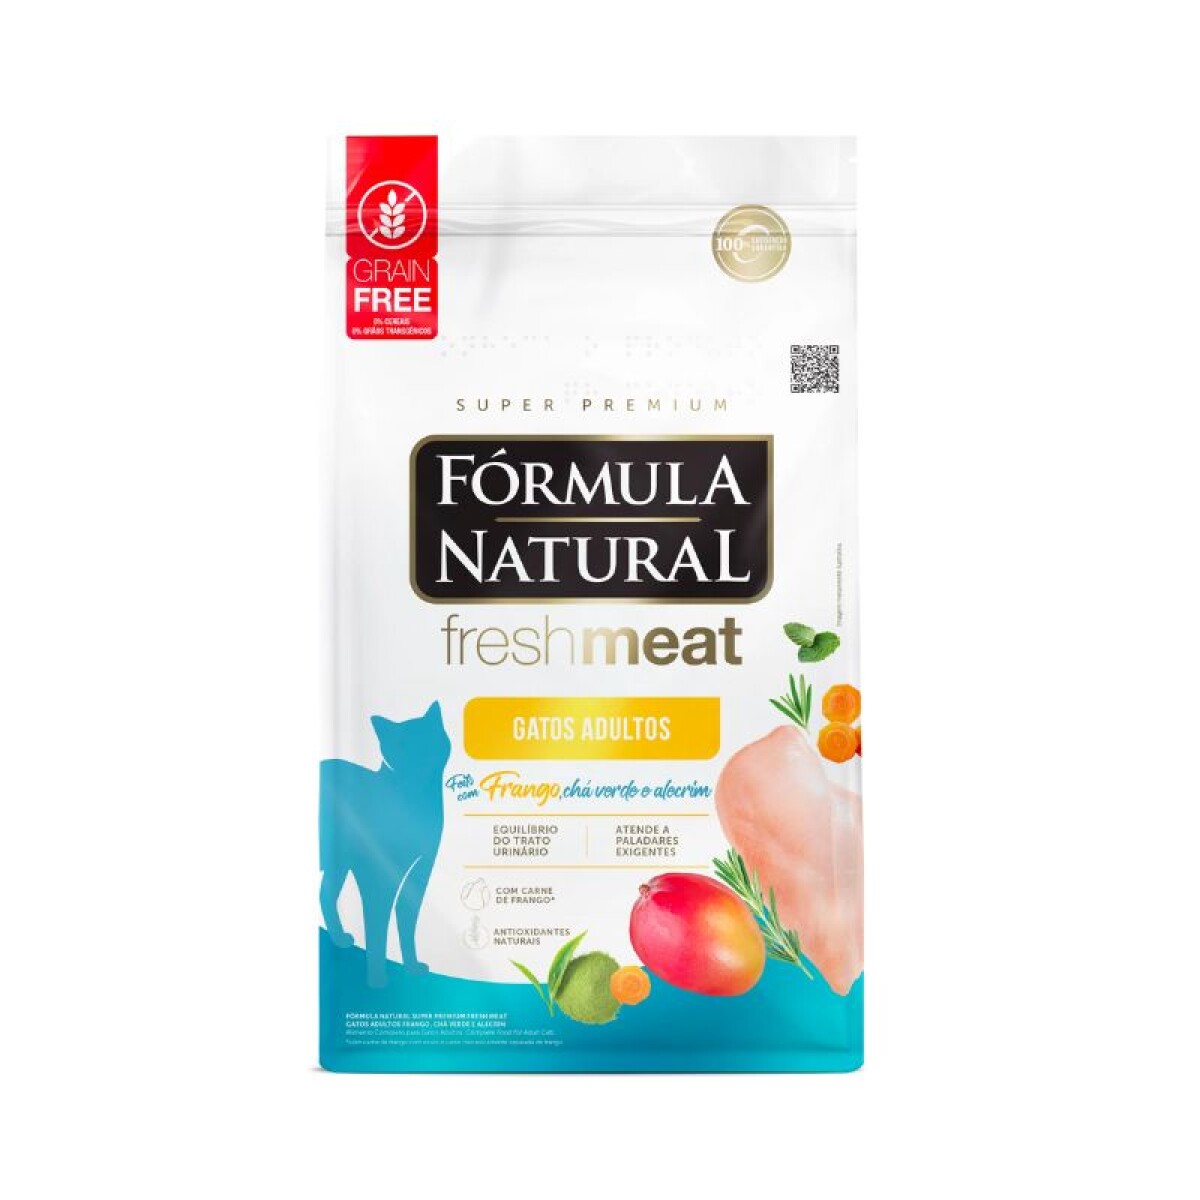 FORMULA NATURAL FRESH MEAT GATOS ADULTOS 7KG - Formula Natural Fresh Meat Gatos Adultos 7kg 